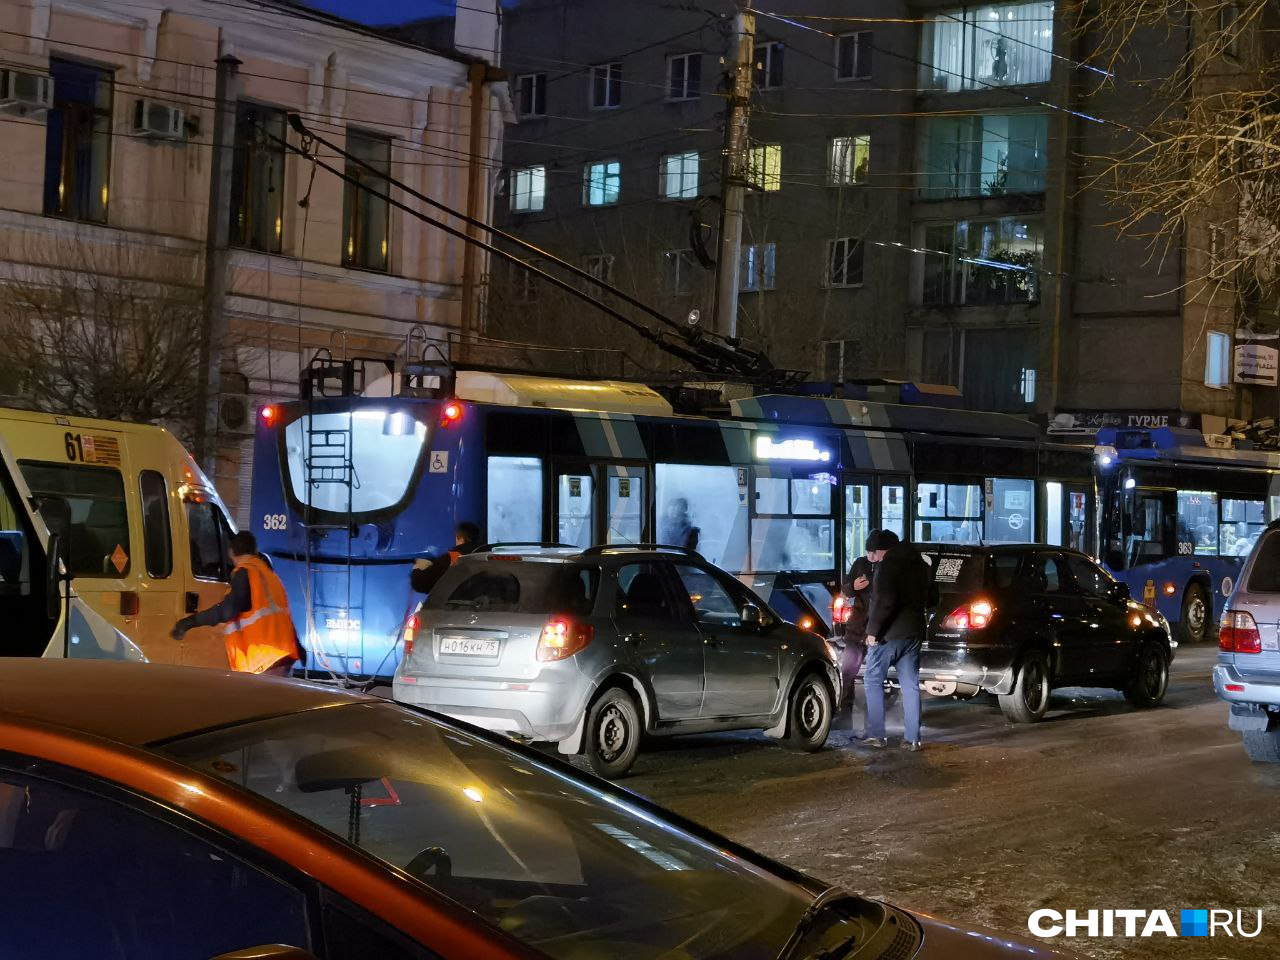 Пробка образовалась на улице Бутина в Чите из-за поломки троллейбуса